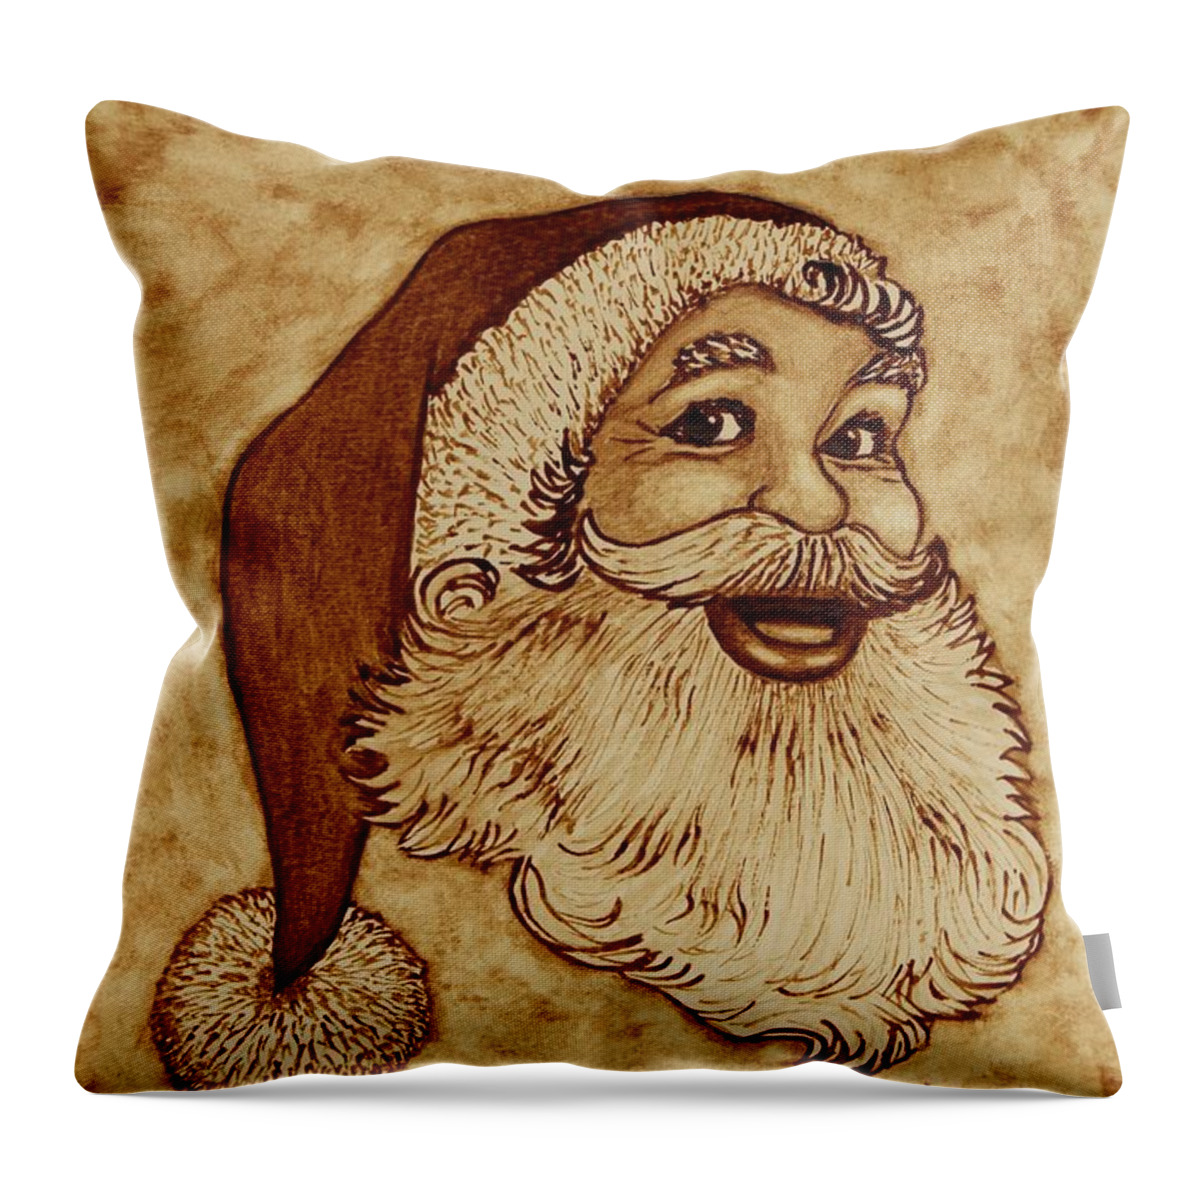 Santa Coffee Art Throw Pillow featuring the painting Santa Claus Joyful Face by Georgeta Blanaru